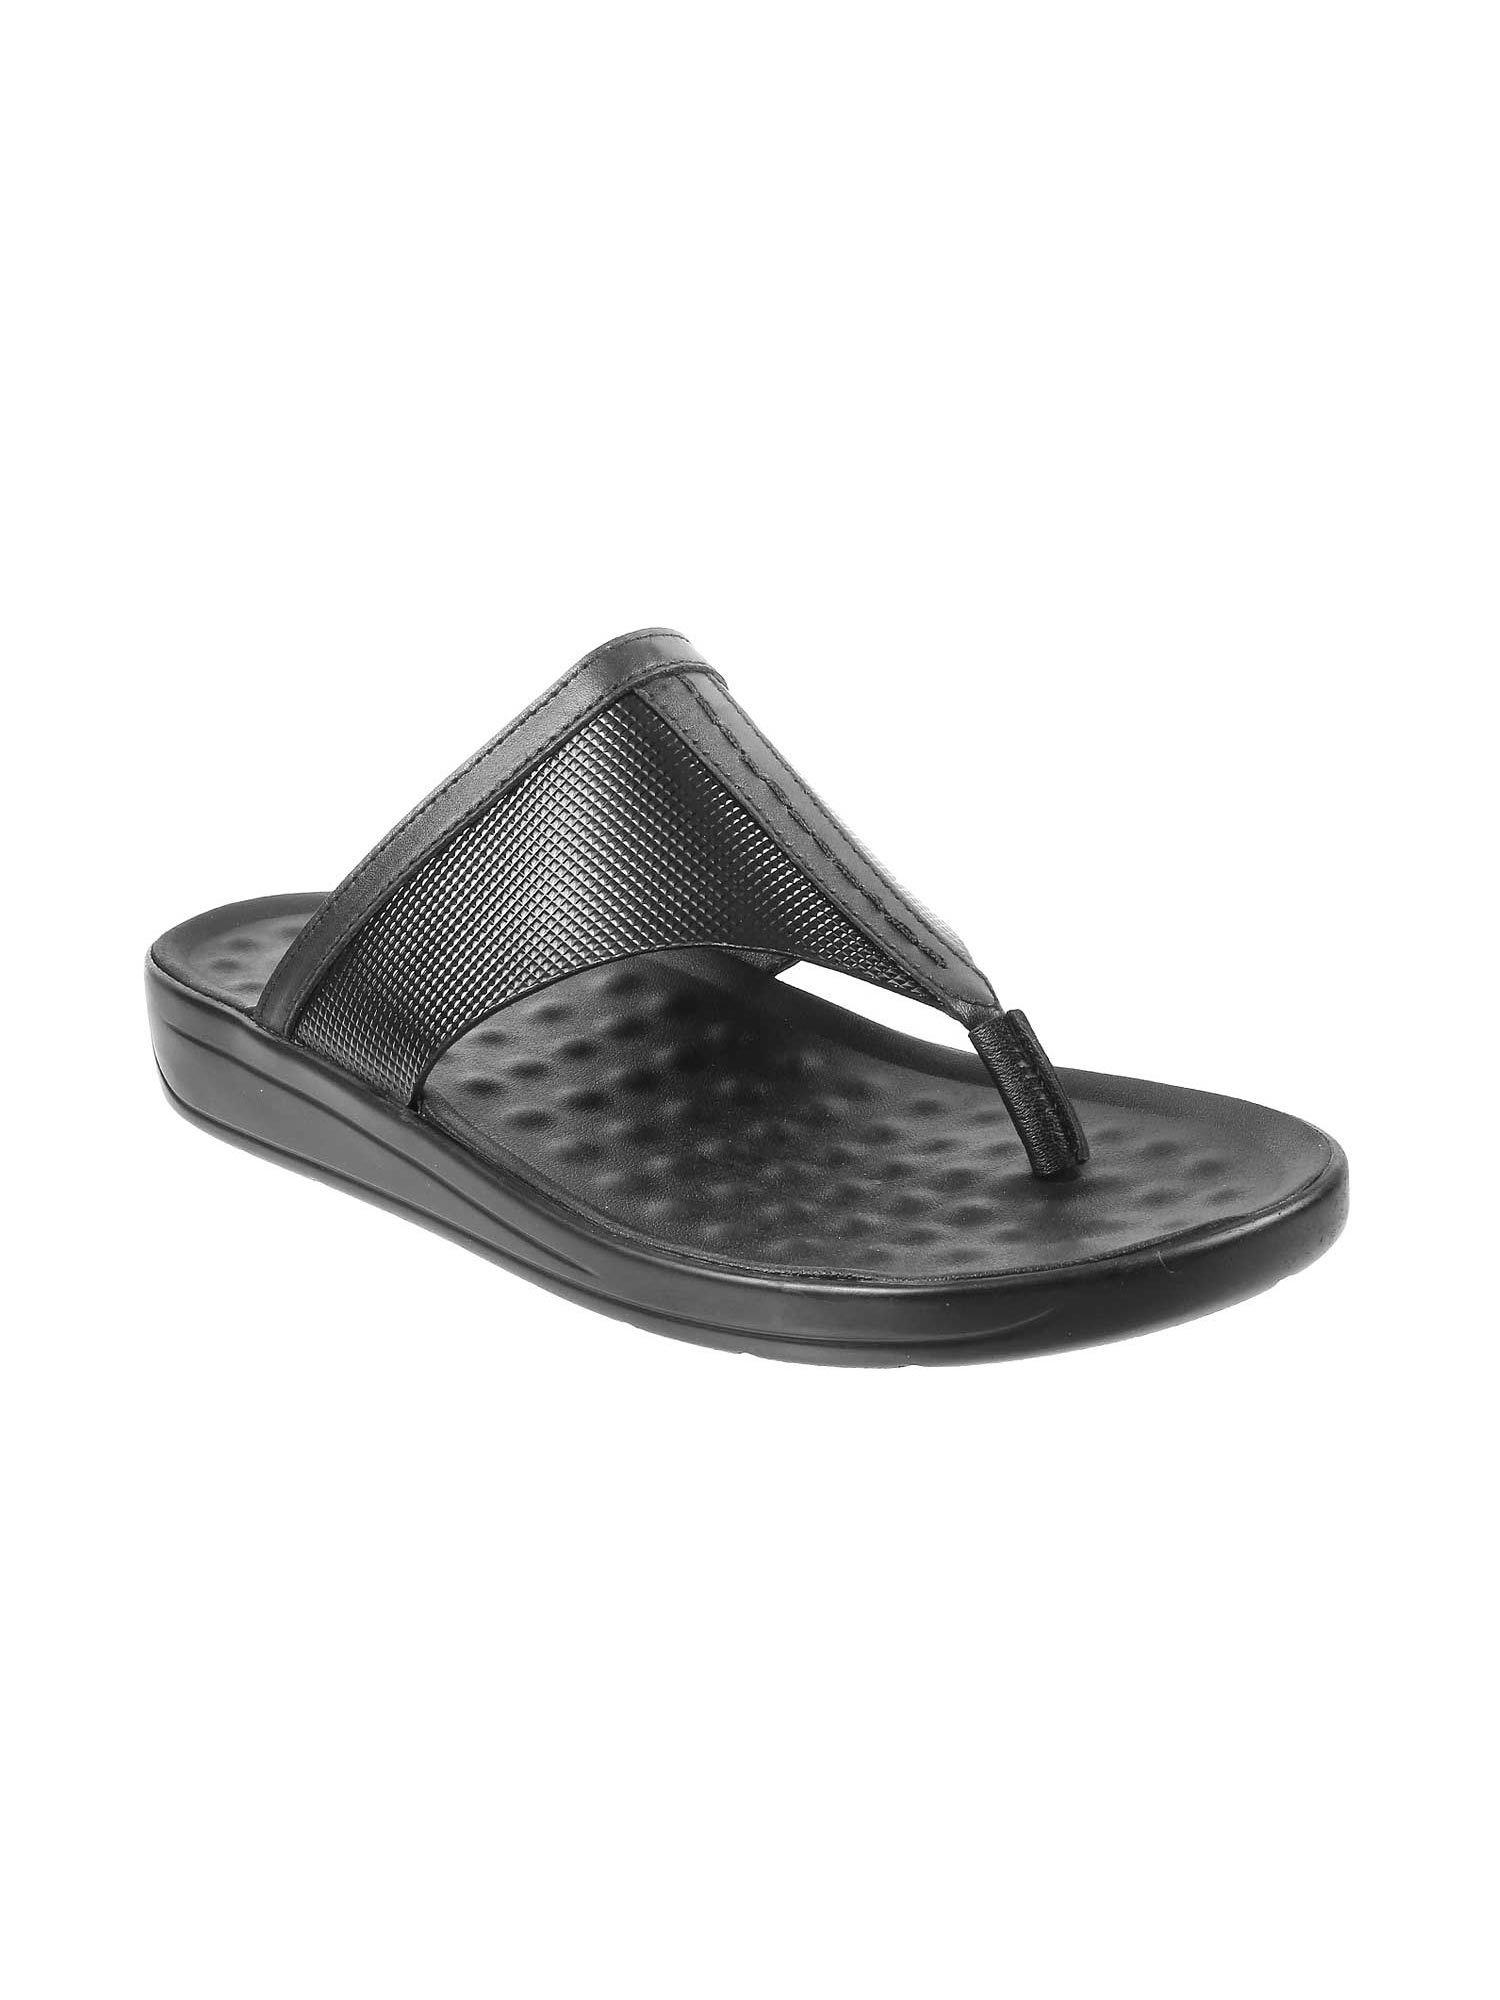 mens black flat chappalsmetro black solid sandals